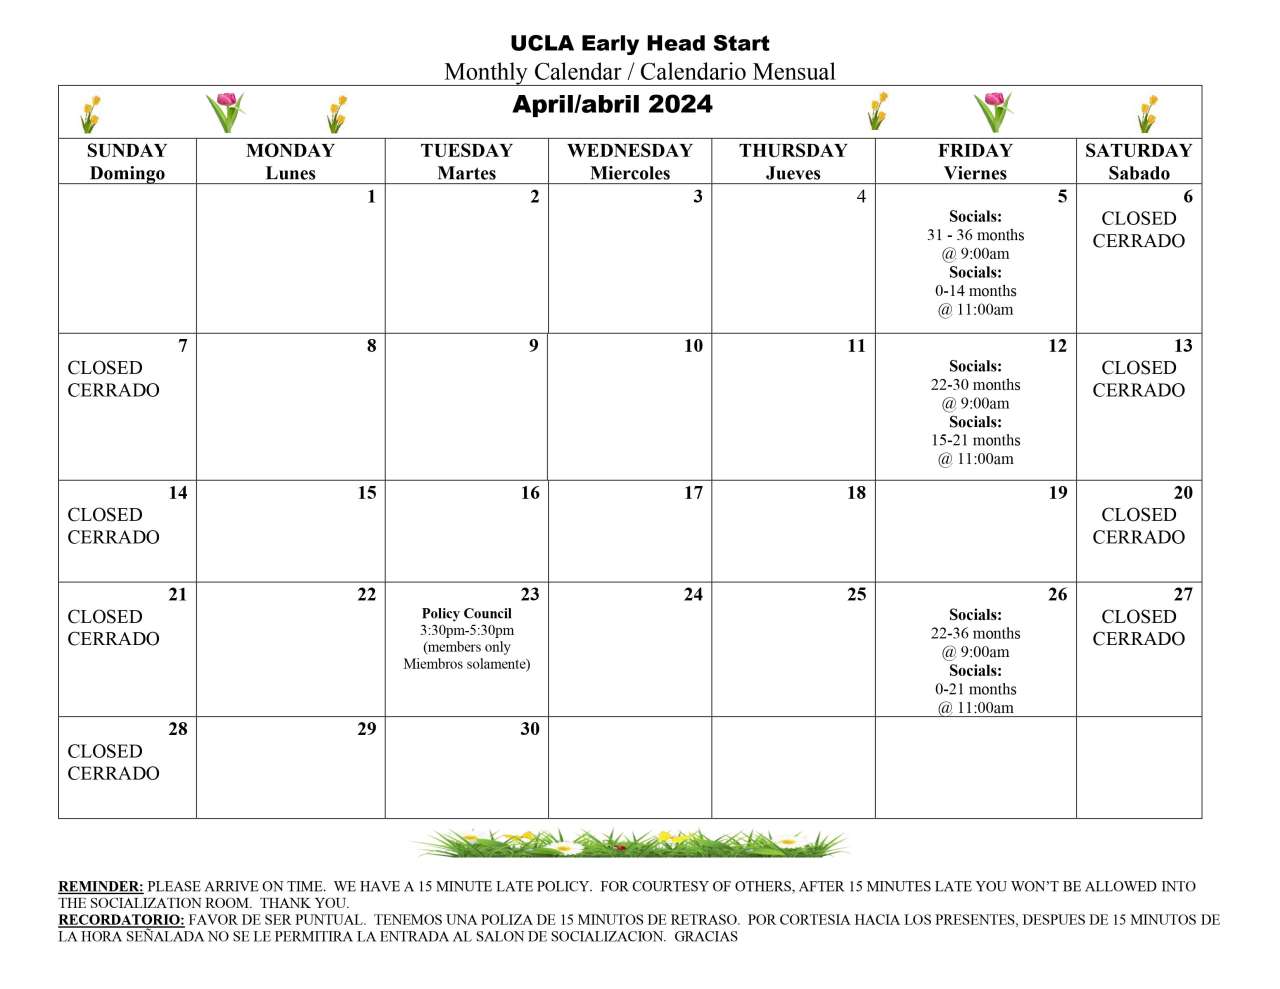 Head Start calendar of events - April